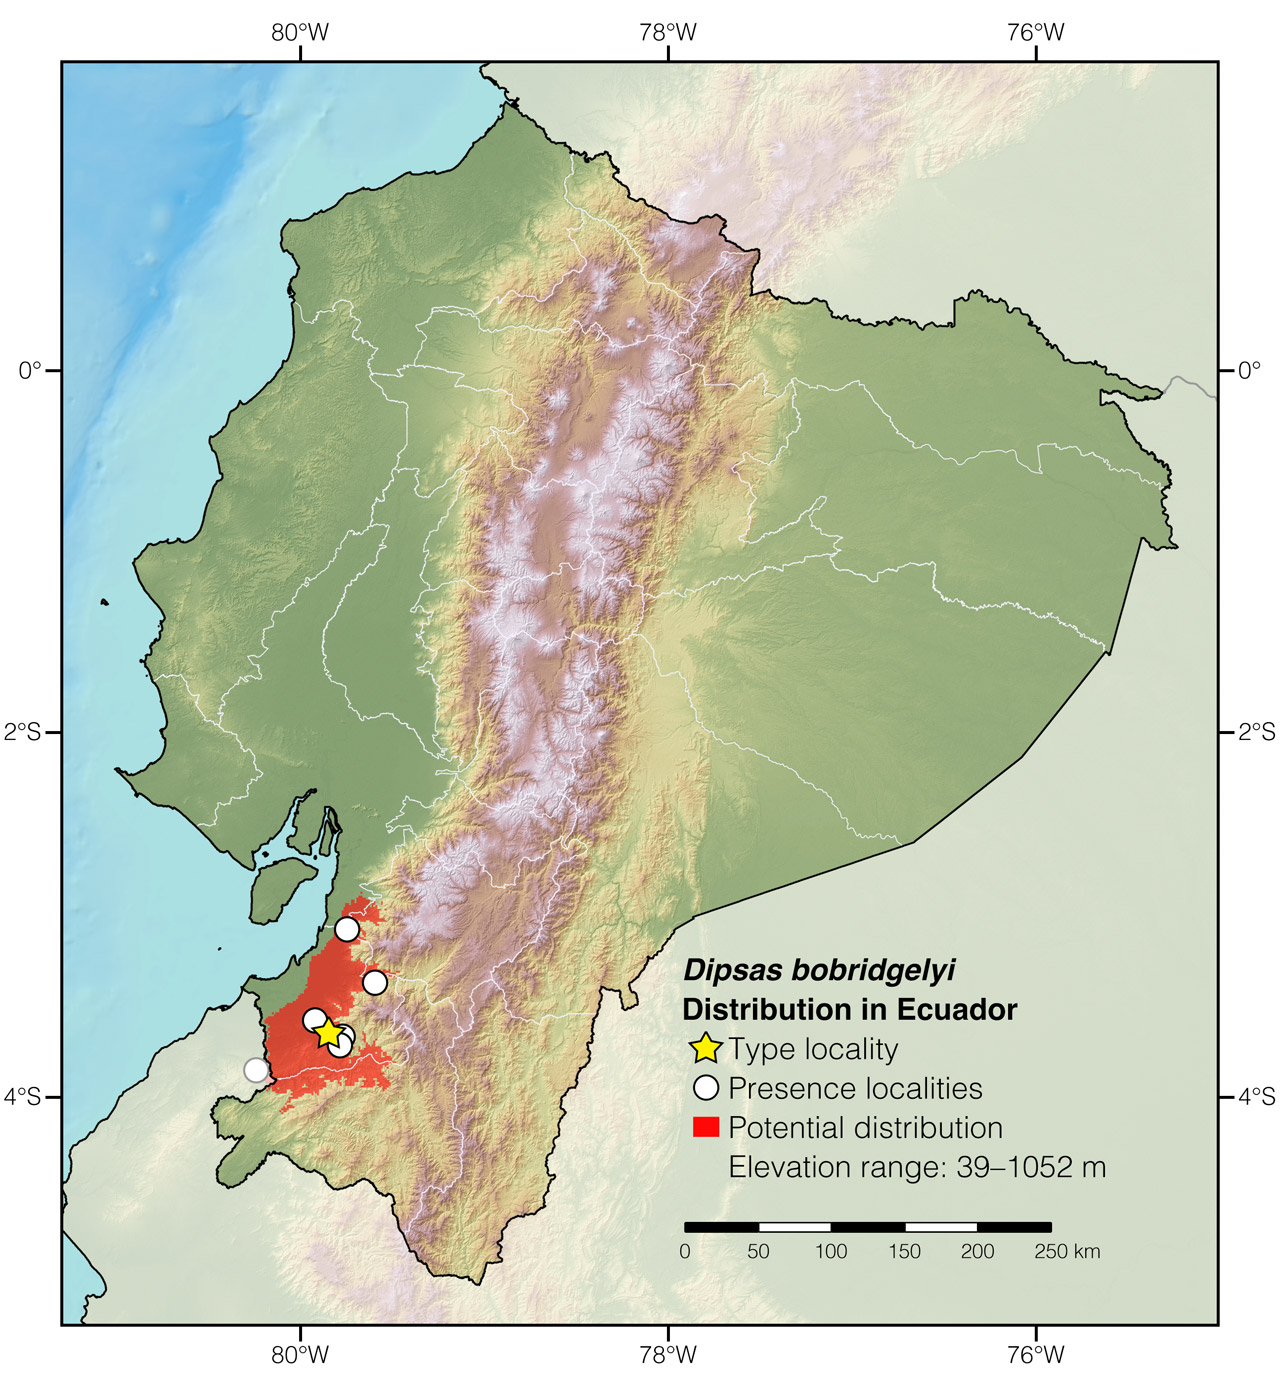 Distribution of Dipsas bobridgelyi in Ecuador